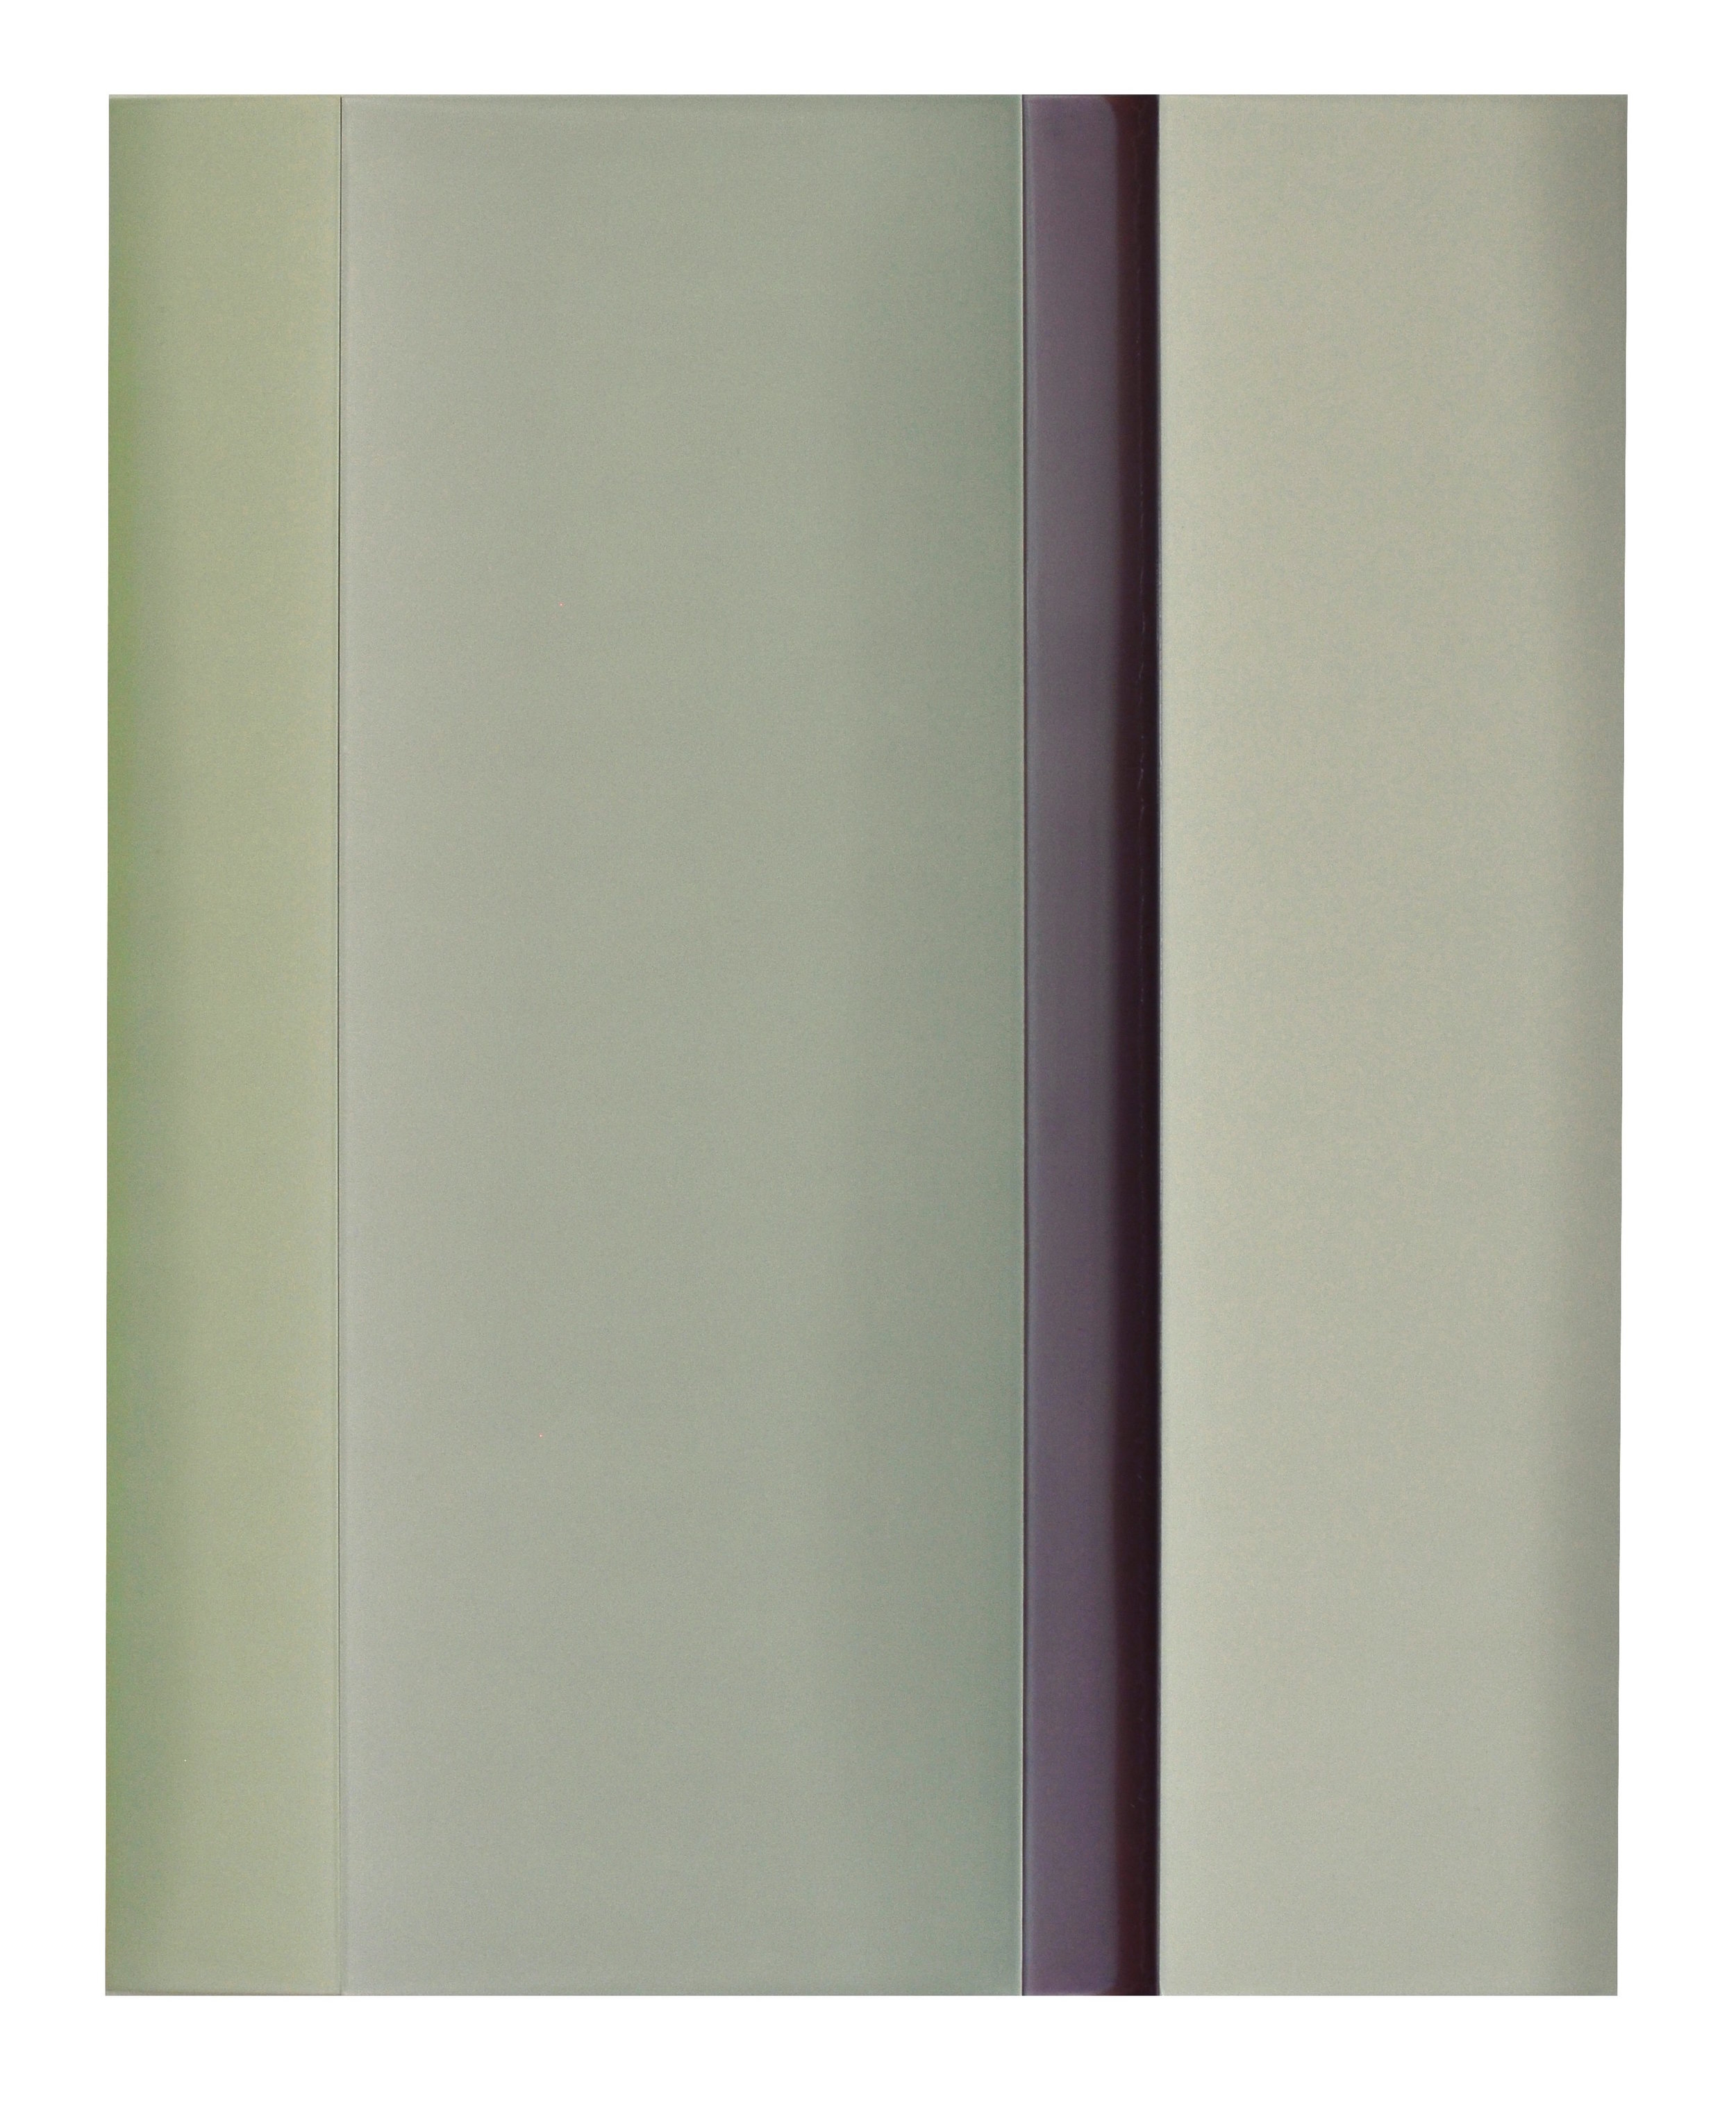   Horizontal/Vertical   56” x 45” tinted polymer on panel 2018 